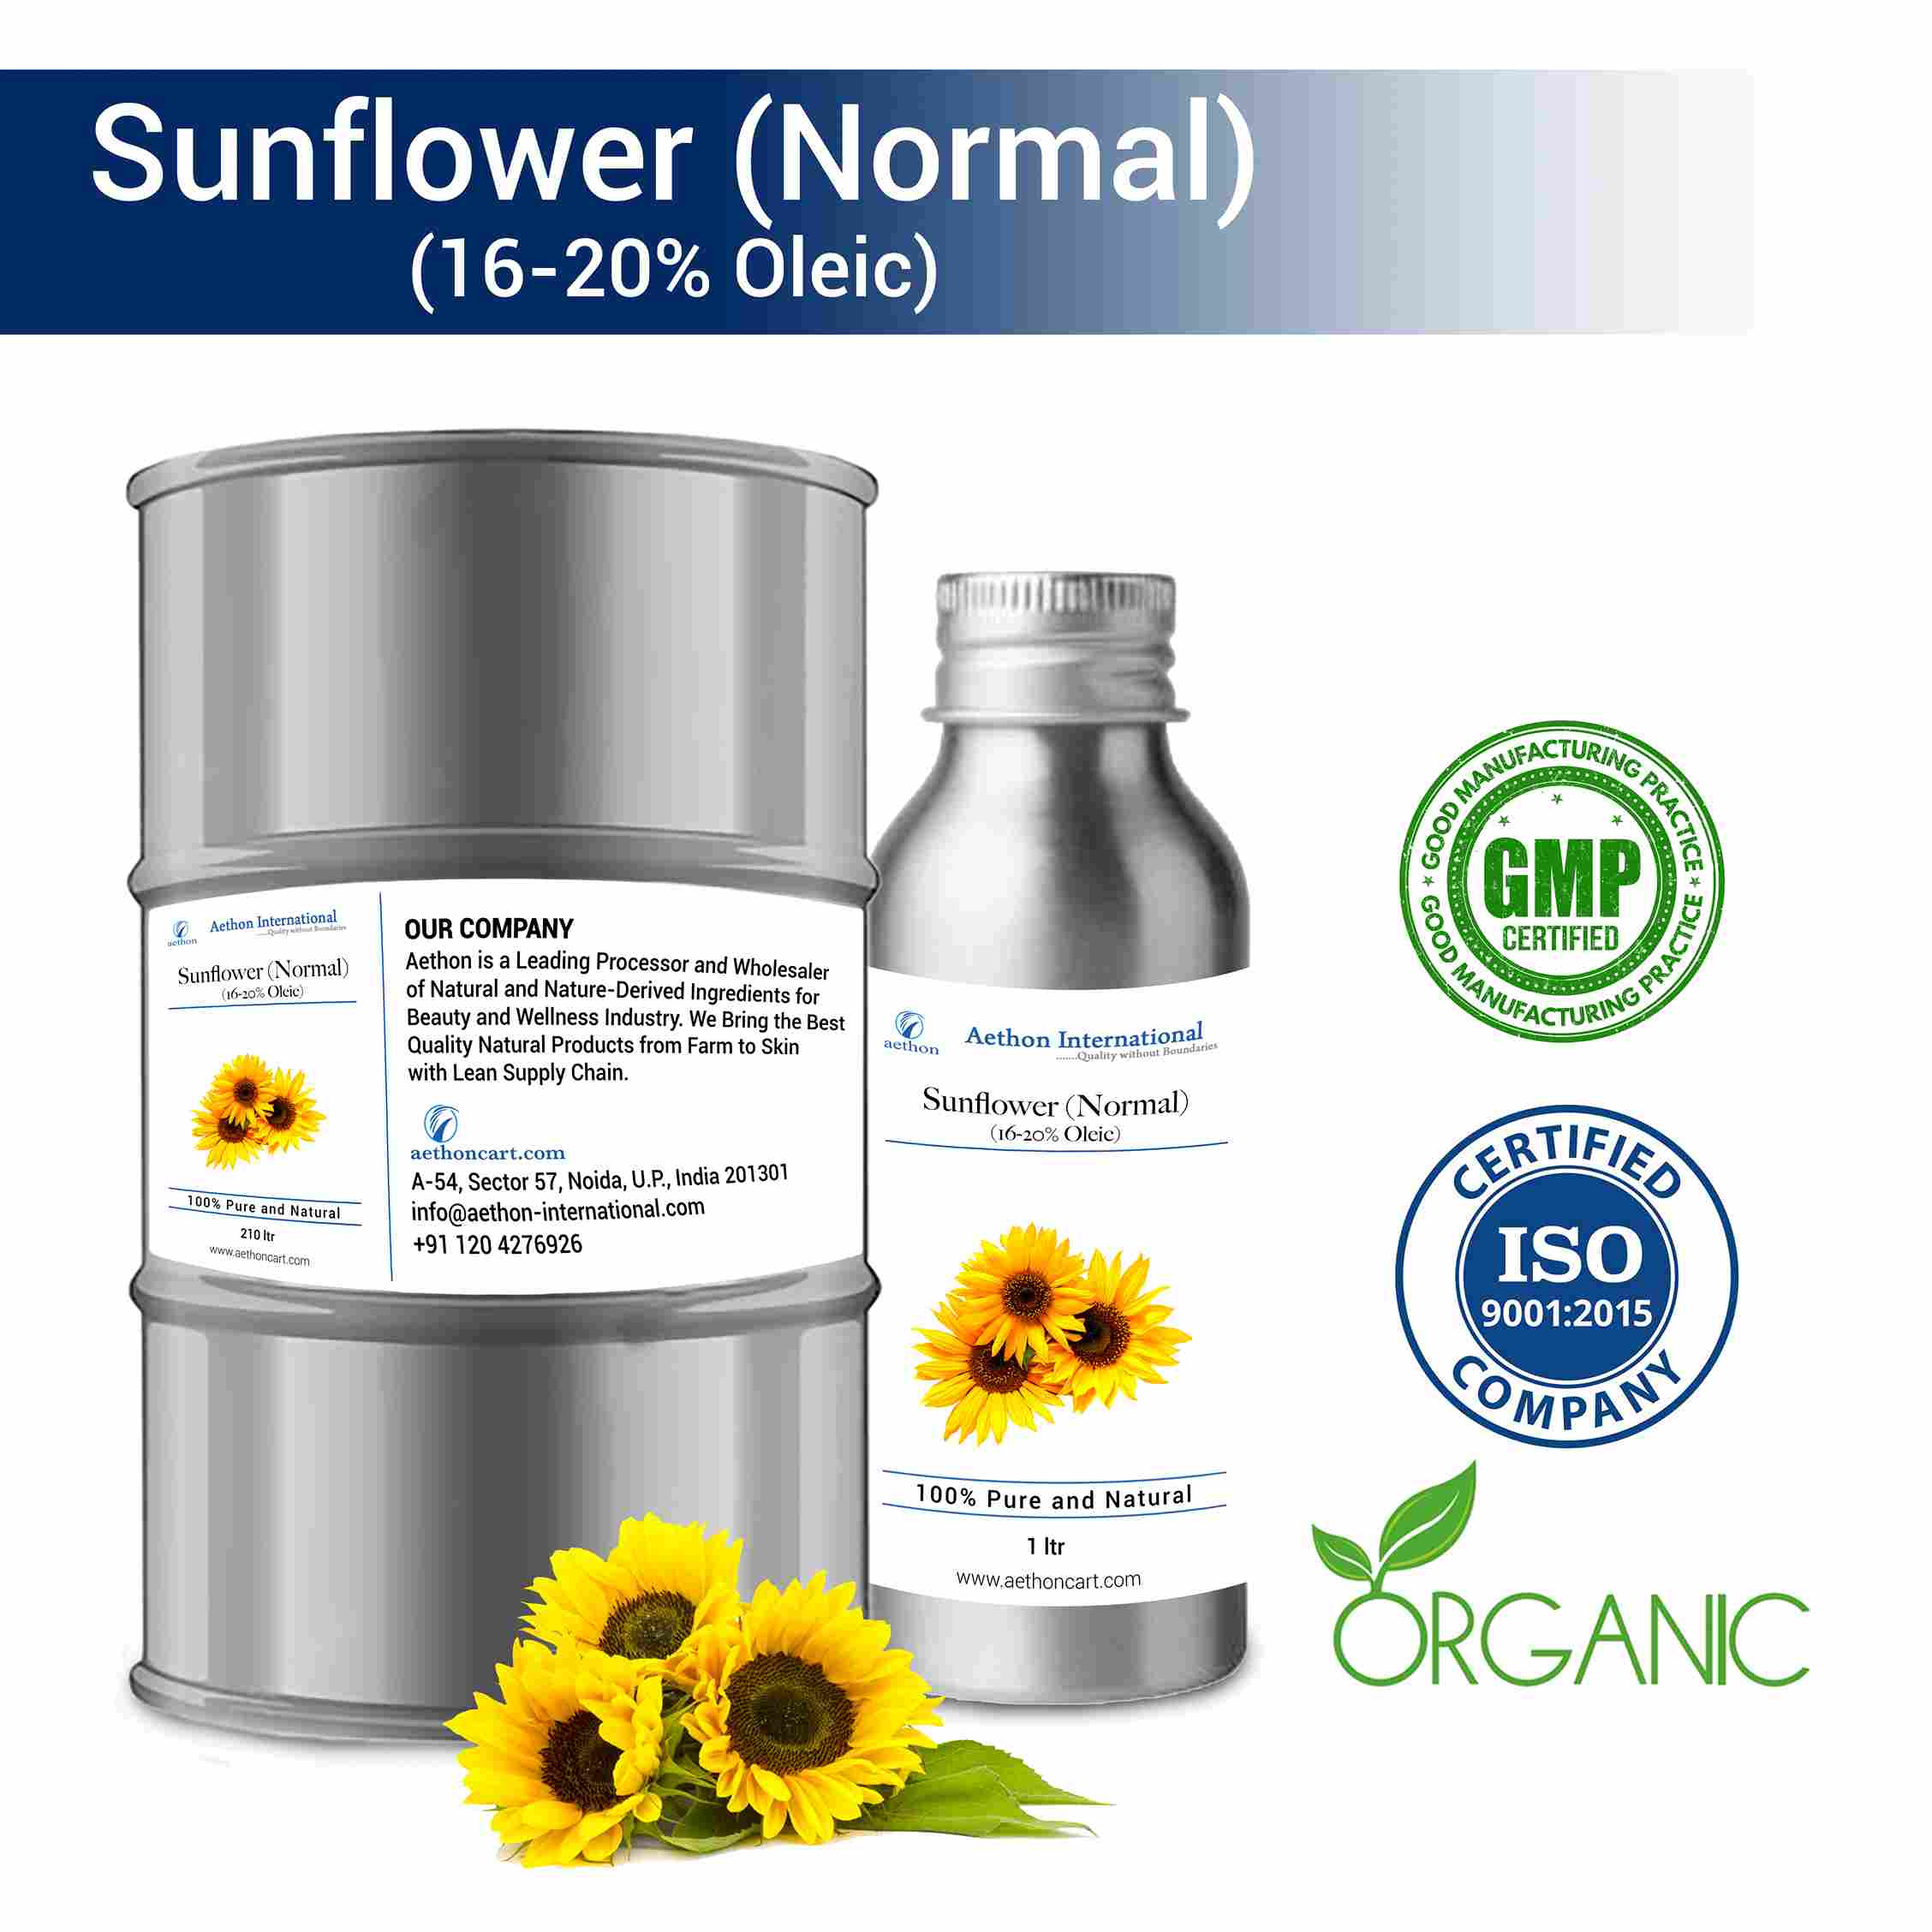 Sunflower (Normal) (16-20% Oleic)